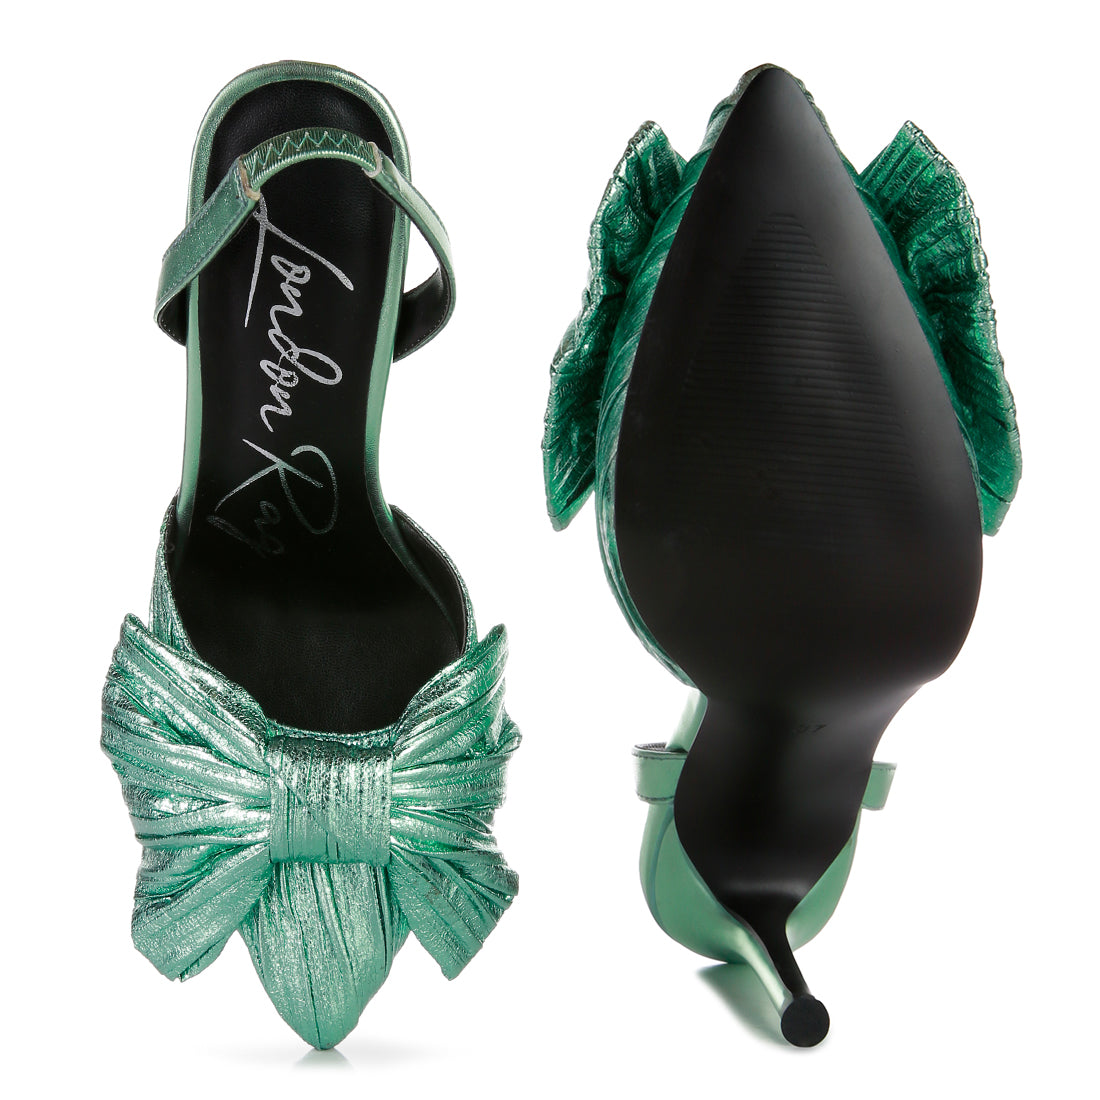 Mint Green High Heeled Bow Slingback Sandals